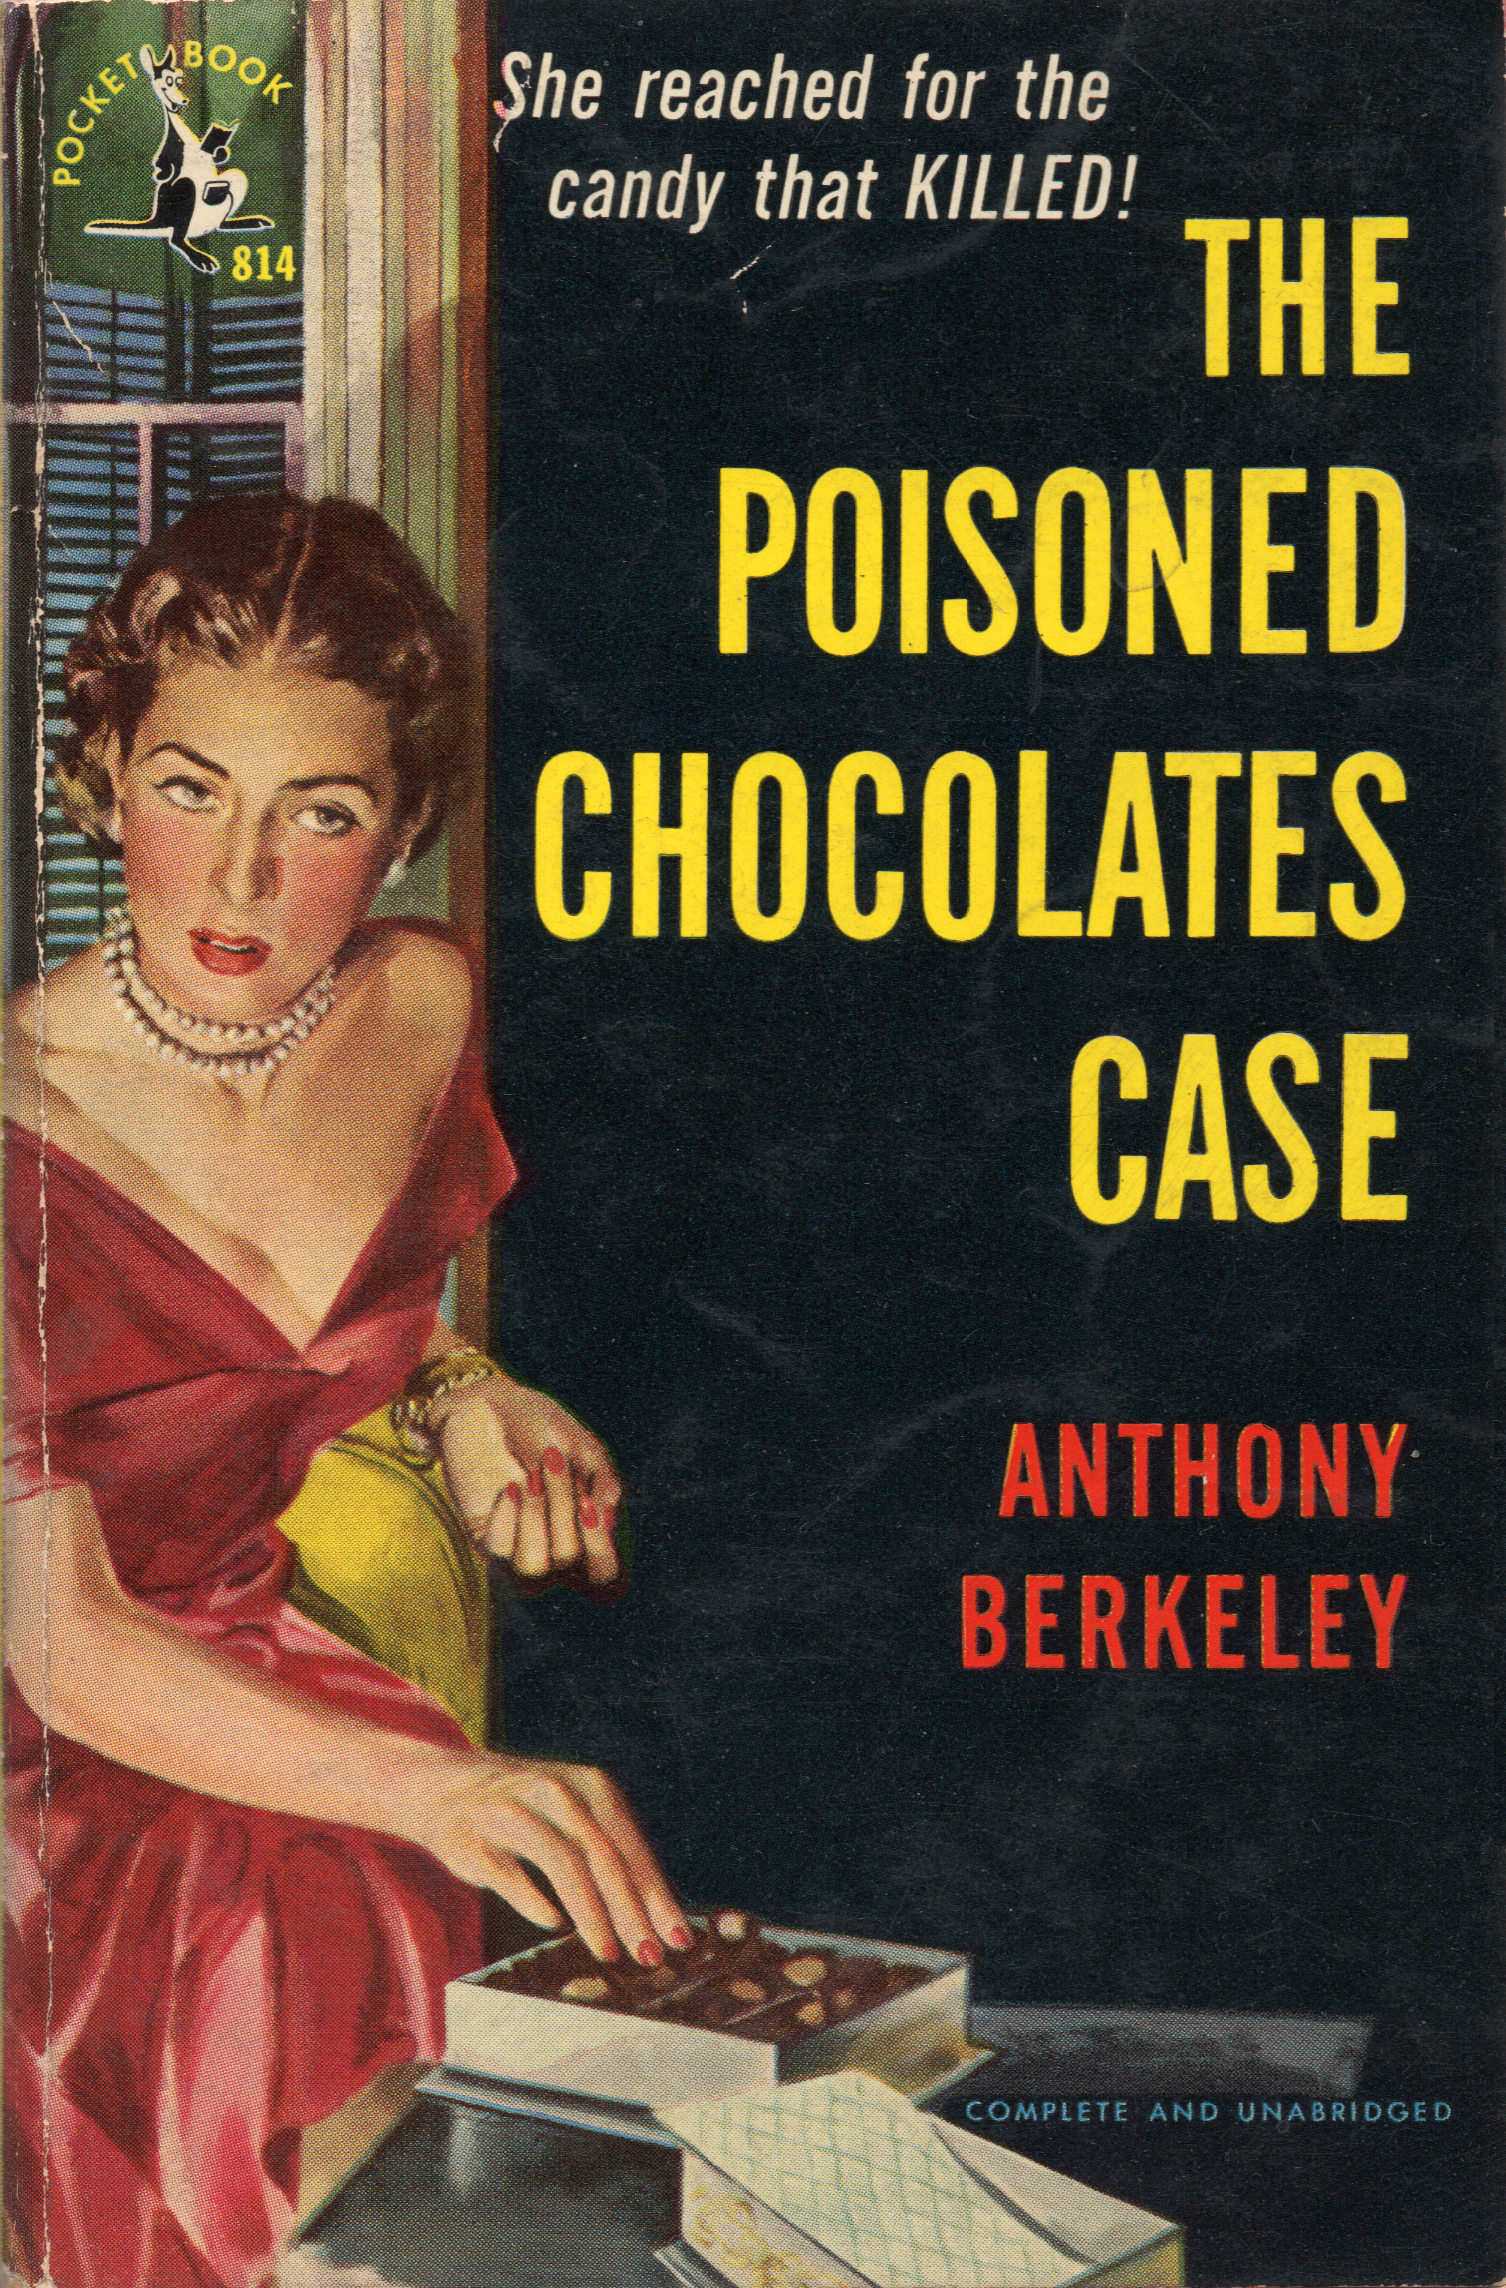 Rogers chocolates case study pdf